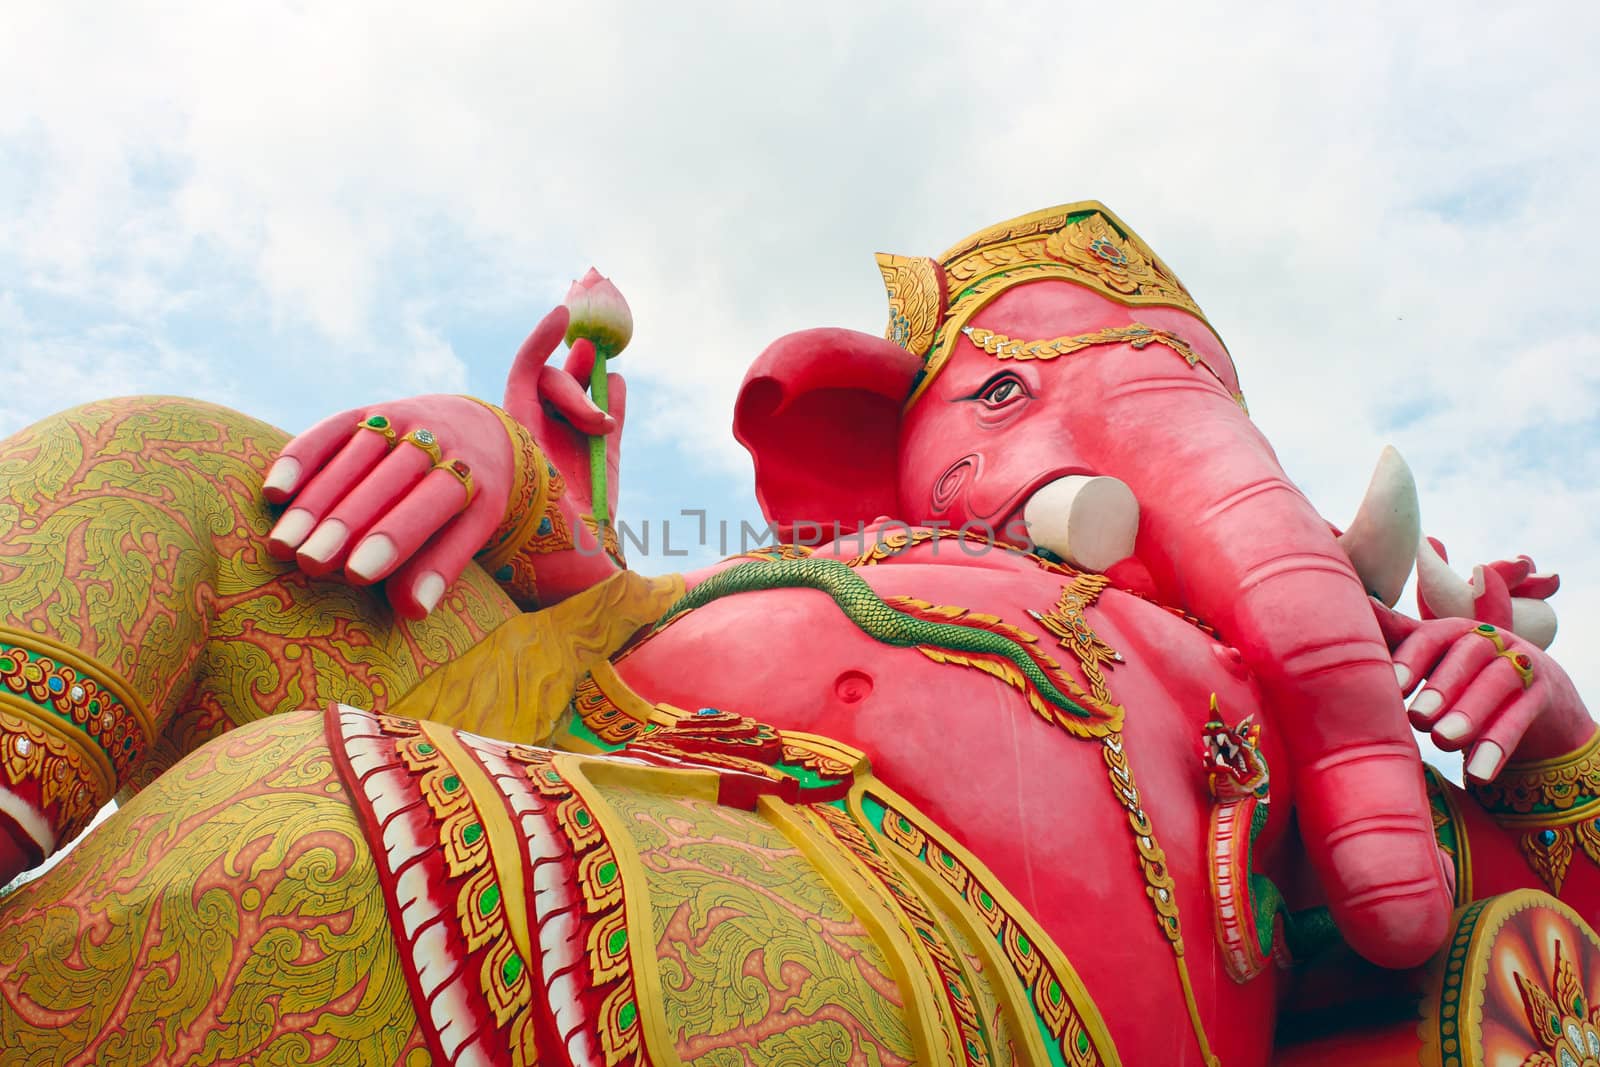 Hindu god, Ganesh statue in Thailand